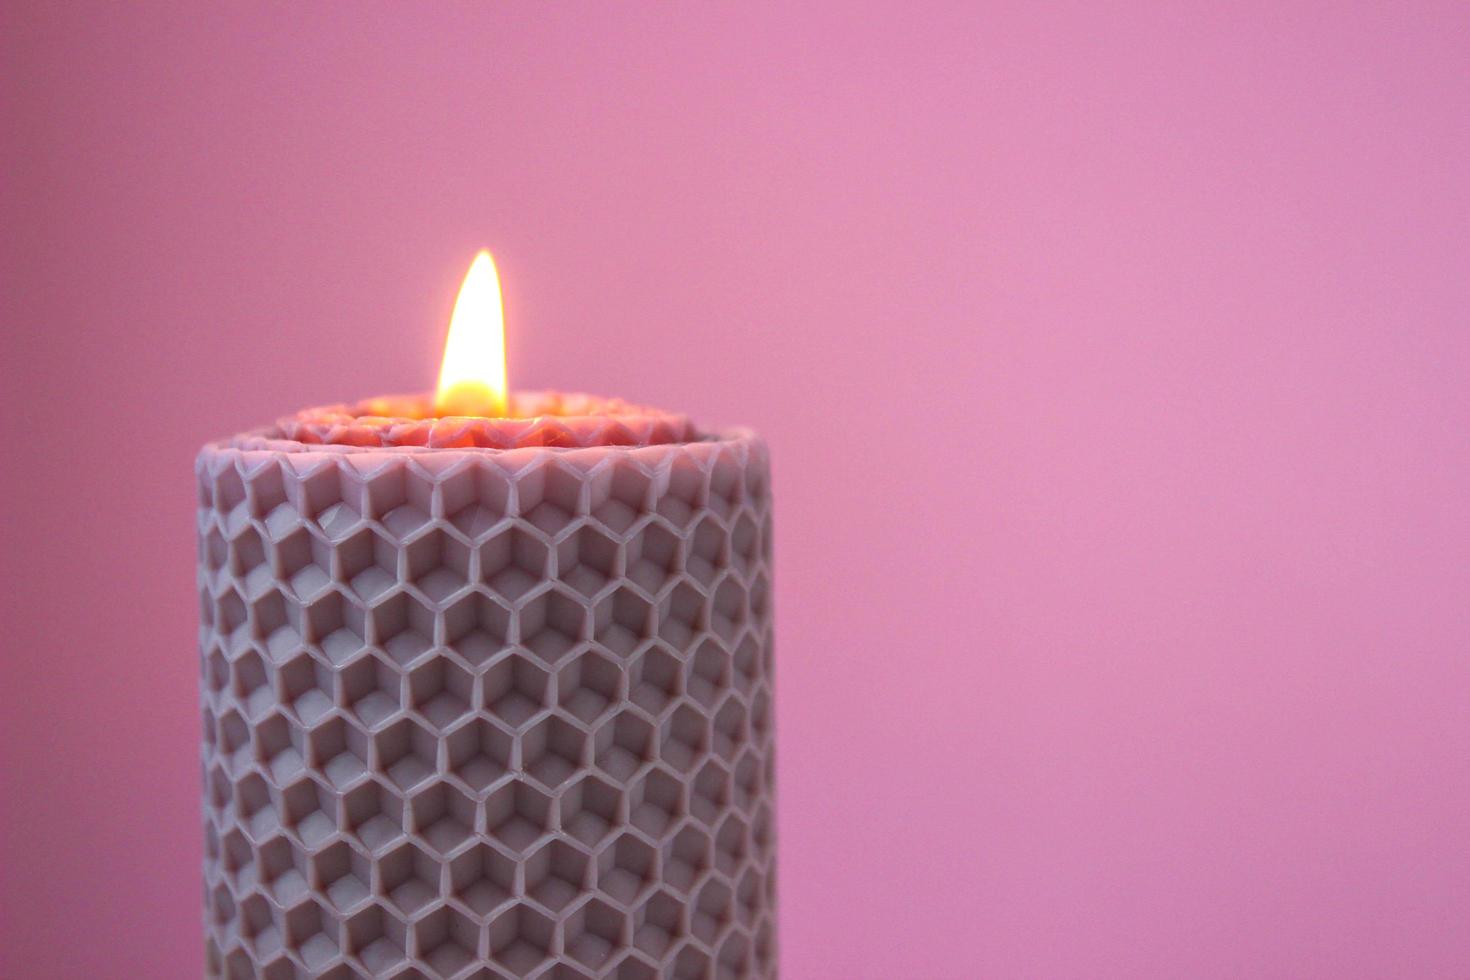 burning wax candle on pink background photo